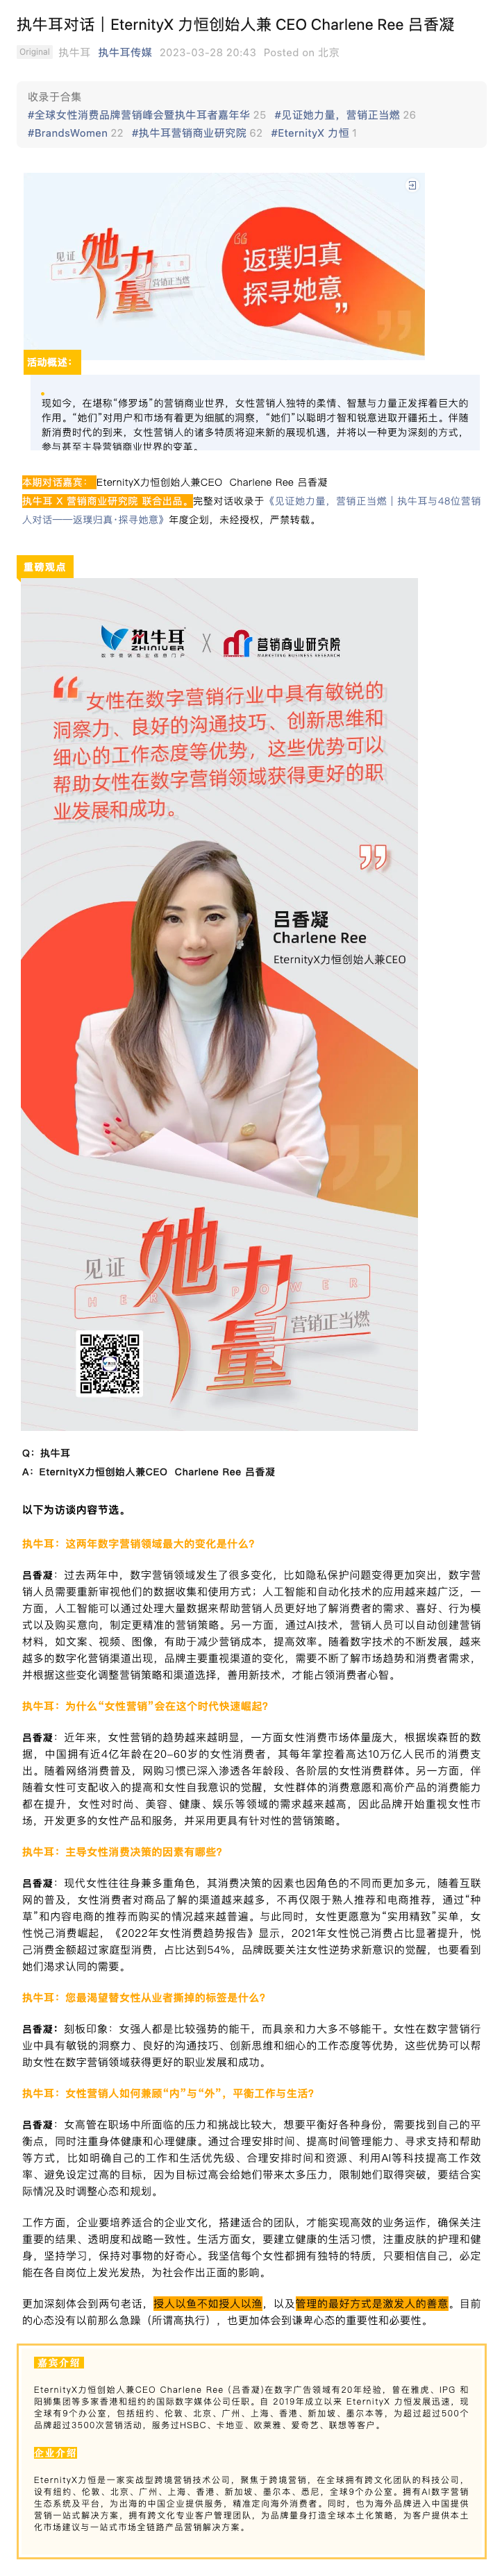 Zhiniuer_A Digital Marketing Information Portal from China